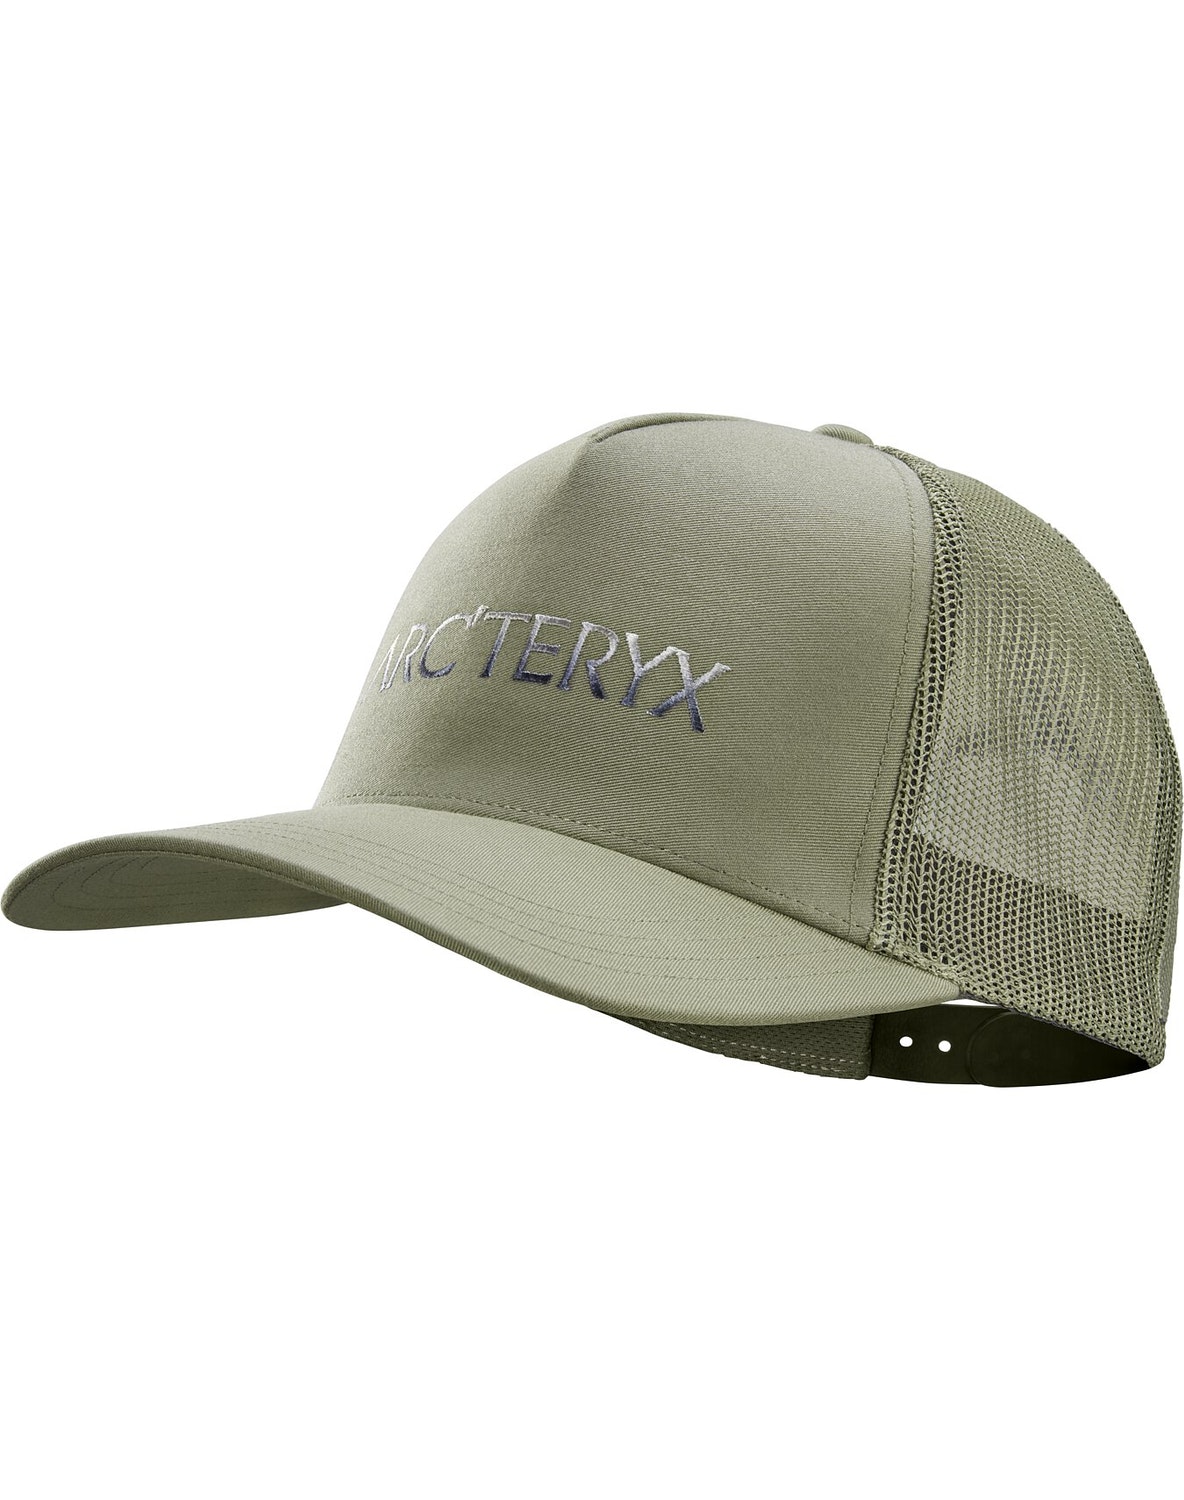 Hats Arc'teryx Polychrome Curved Brim Uomo Verdi Chiaro - IT-646653591